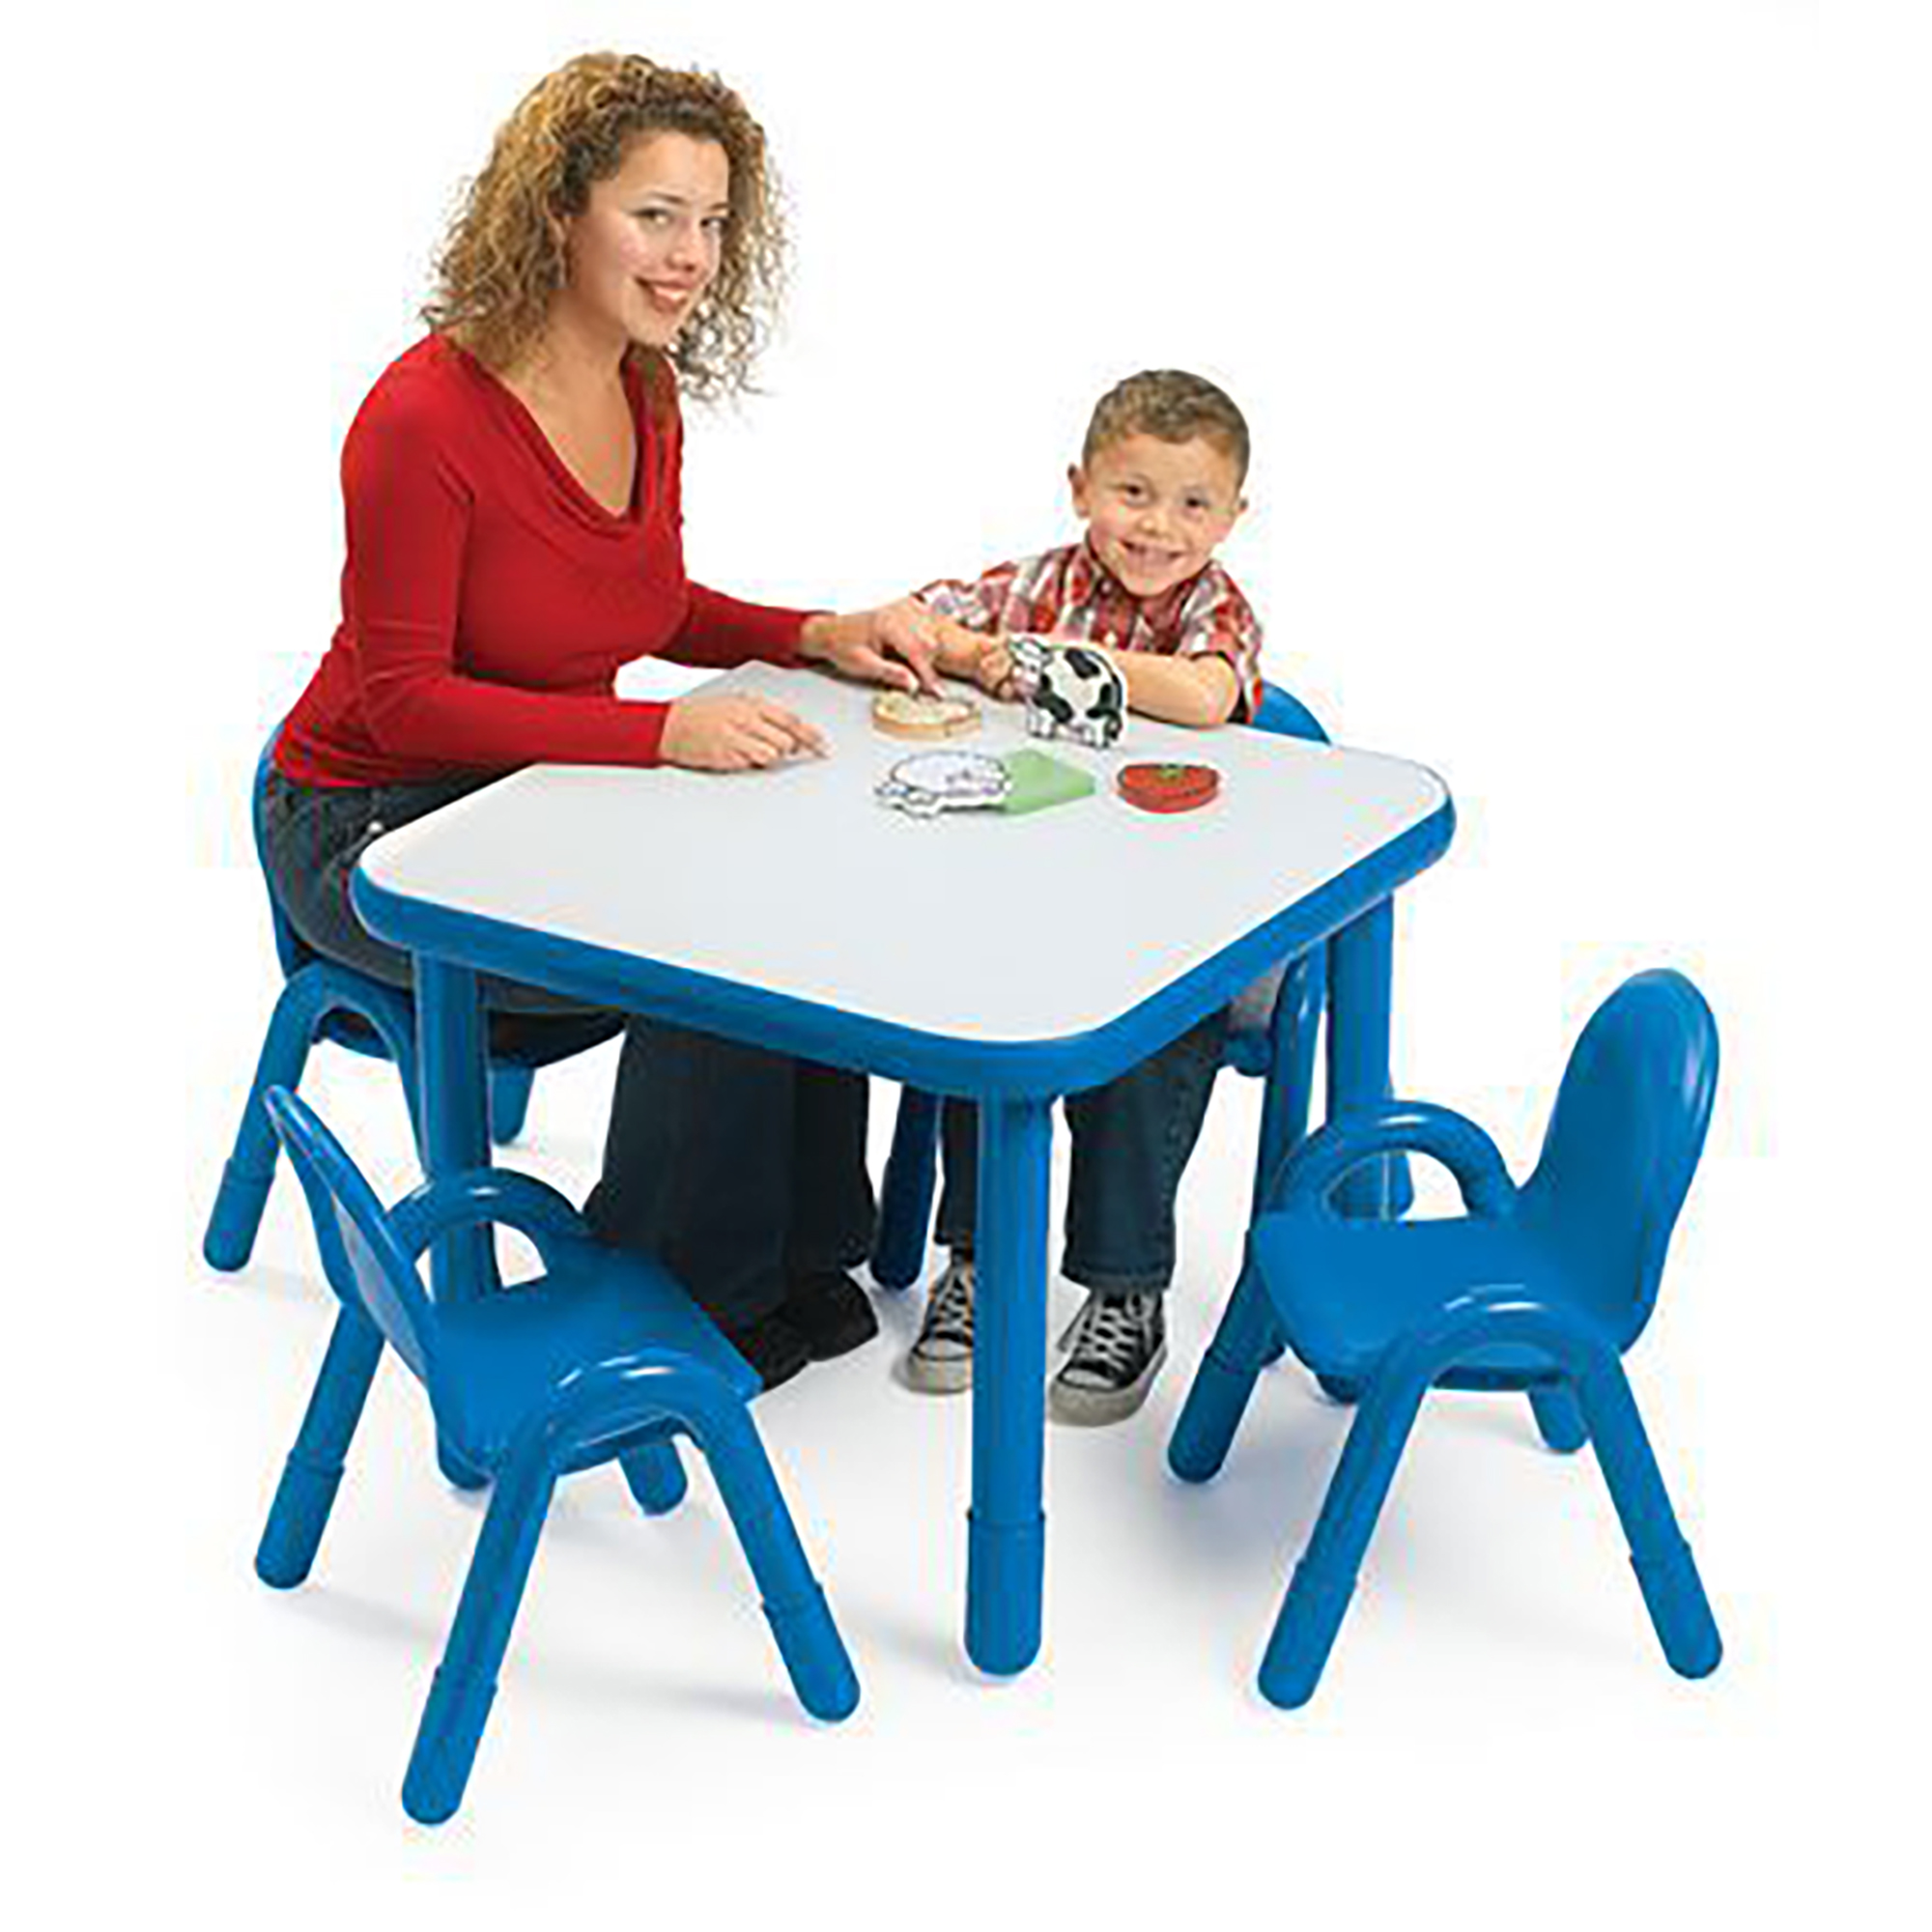 BaseLine® Preschool 76 cm  Square Table & Chair Set - Solid Royal Blue